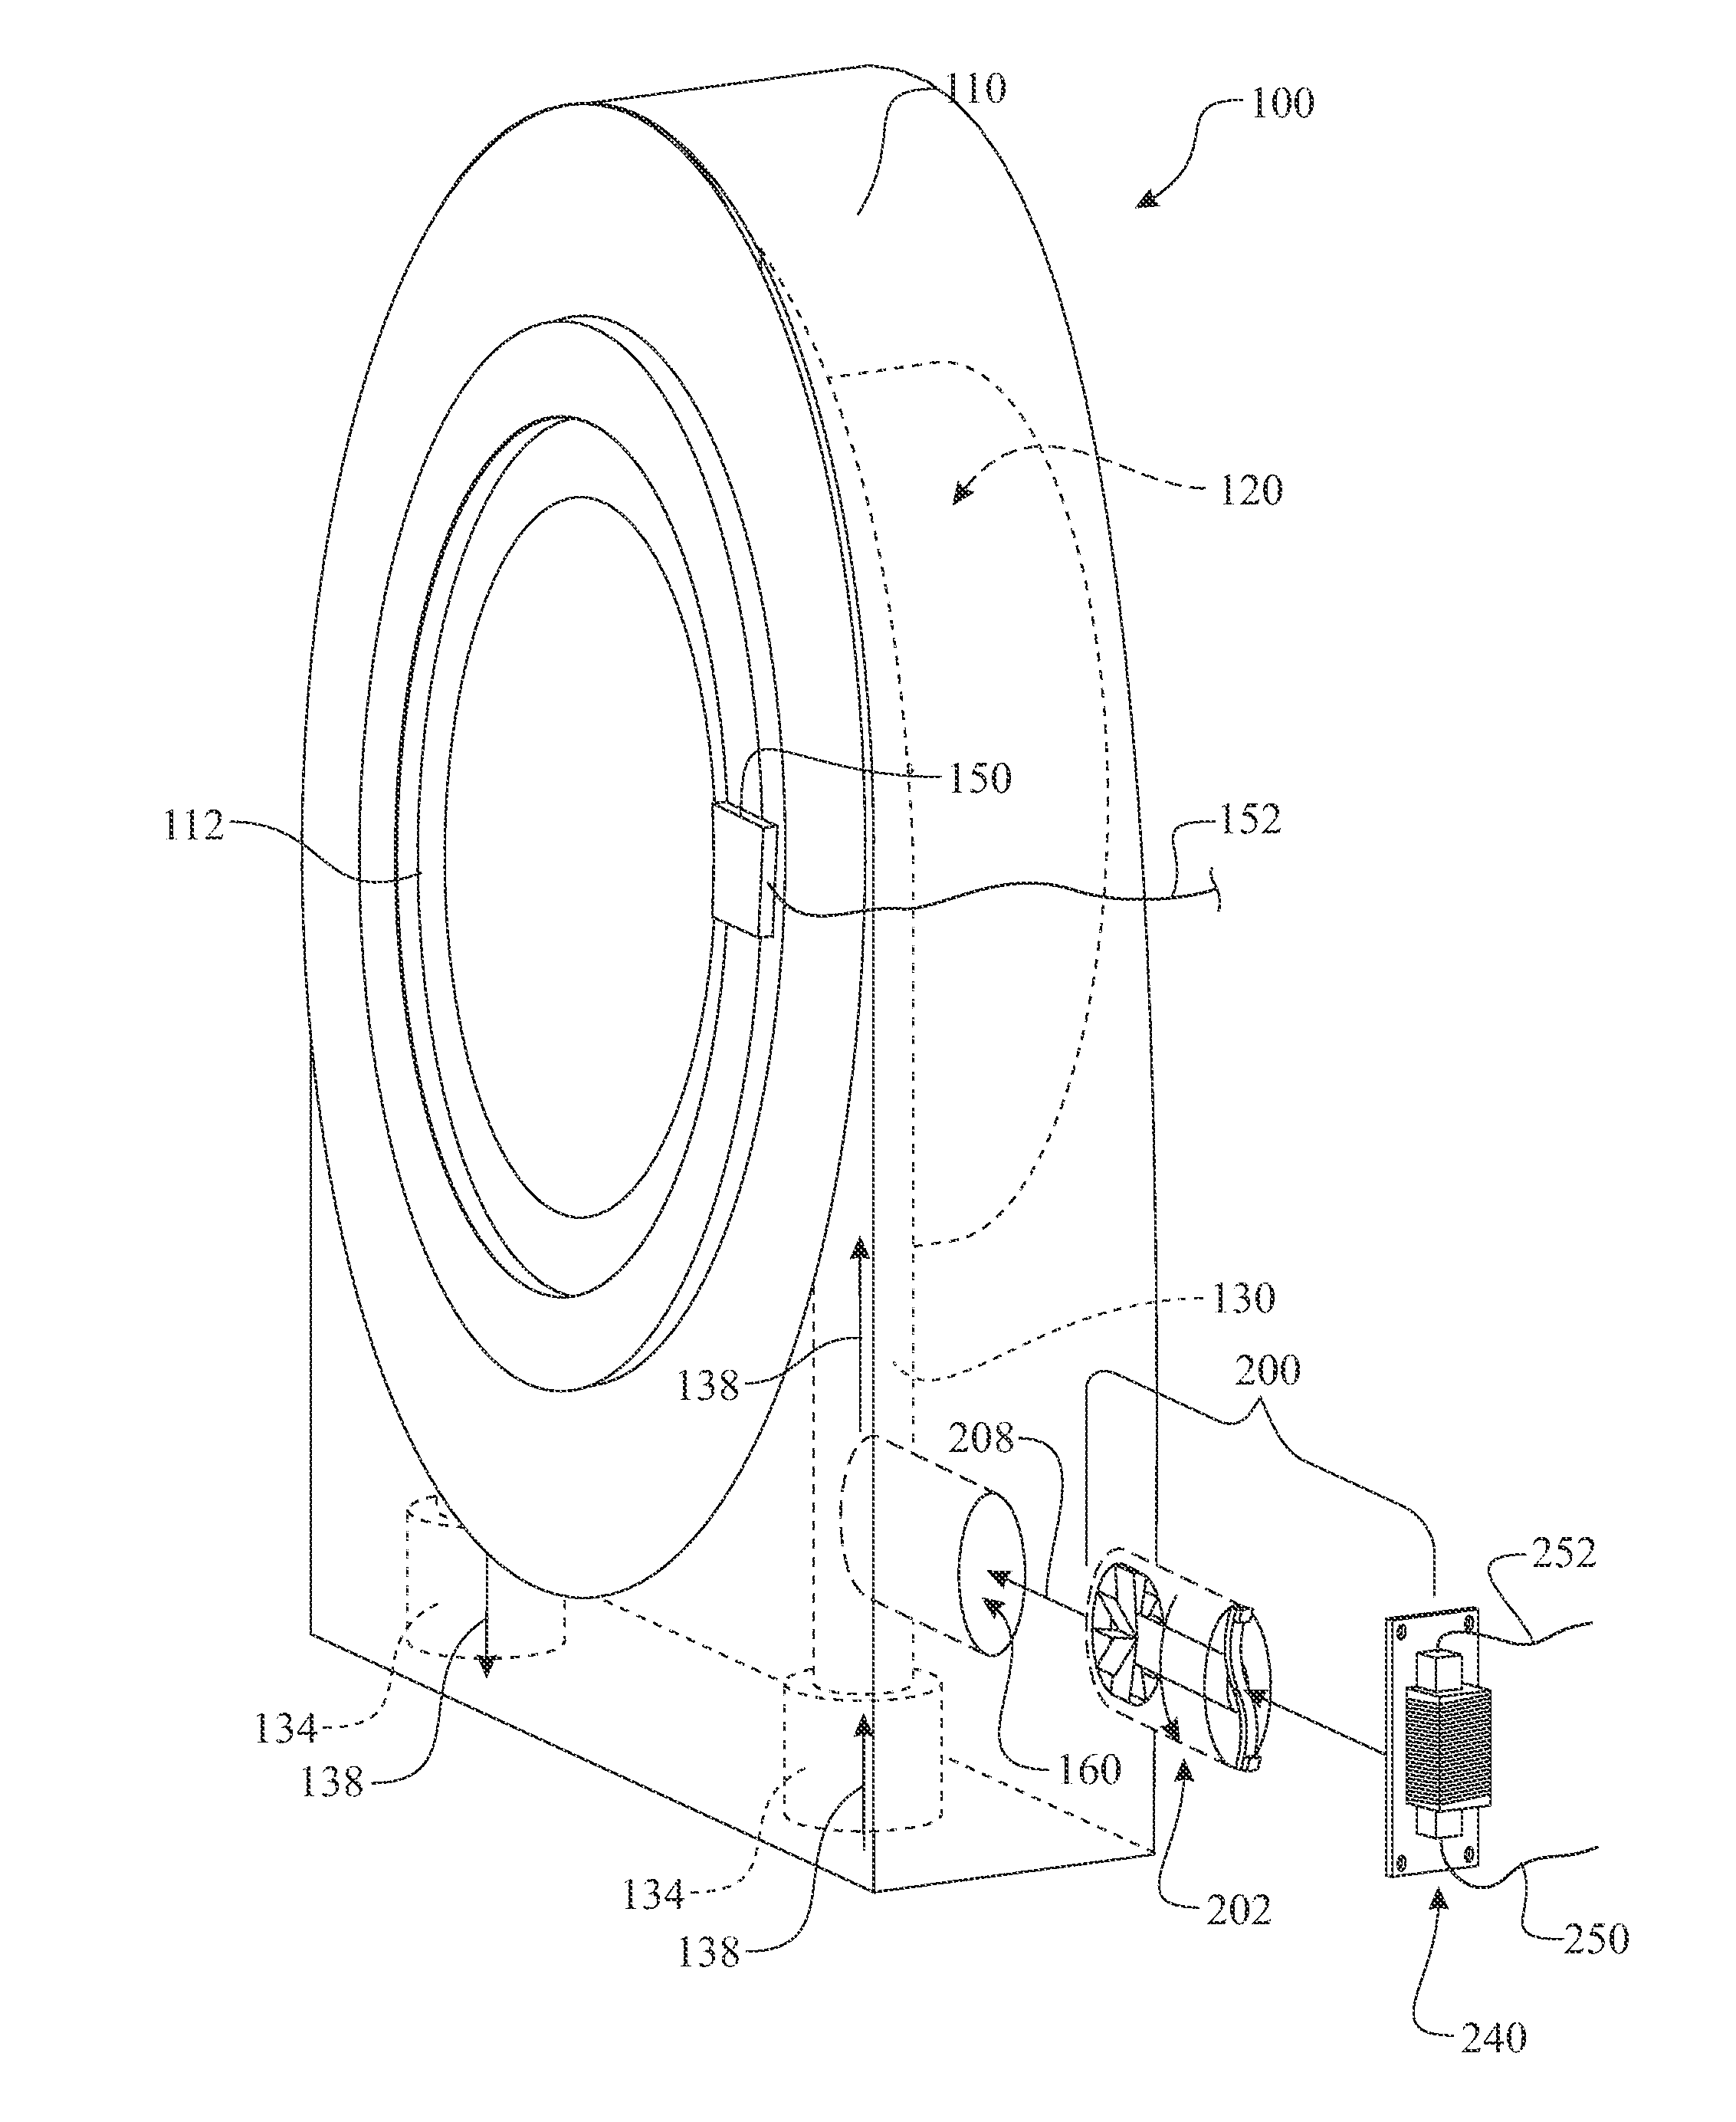 Power harvesting bearing configuration